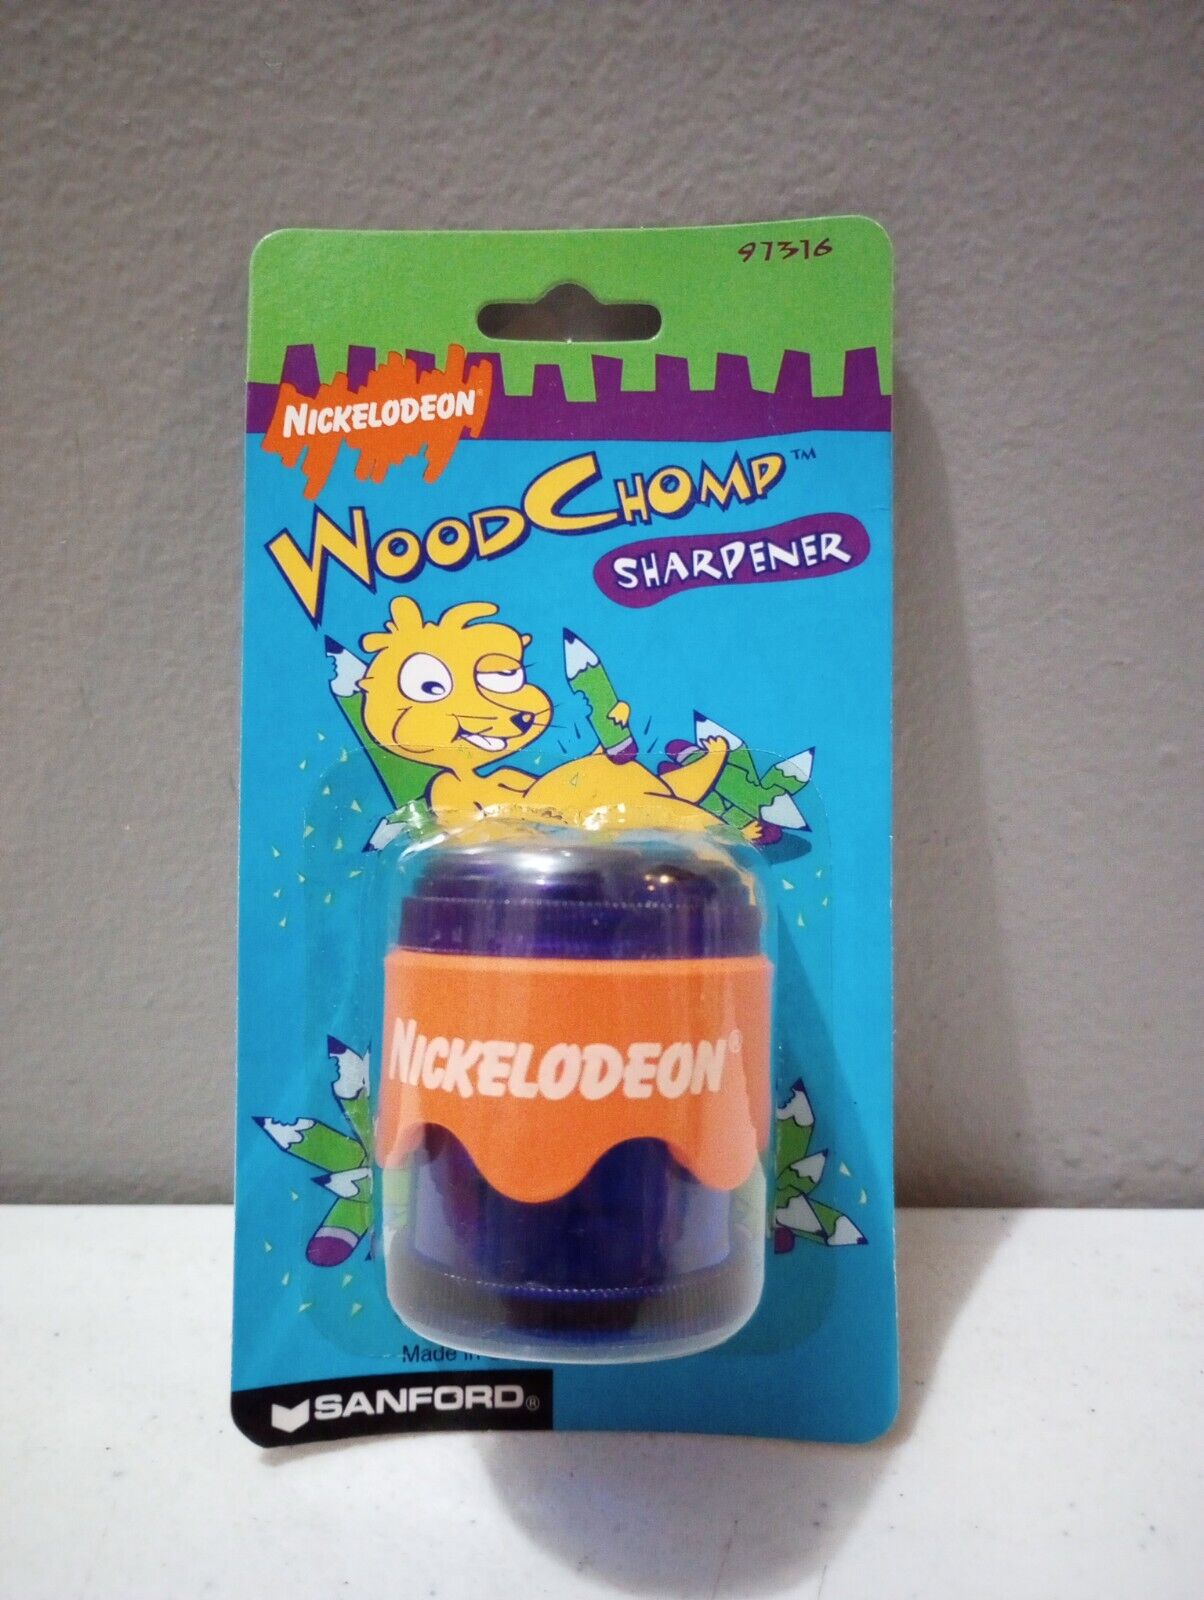 Nickelodeon Wood Chomp Pencil Sharpener Vintage  90’s Nickelodeon collectible